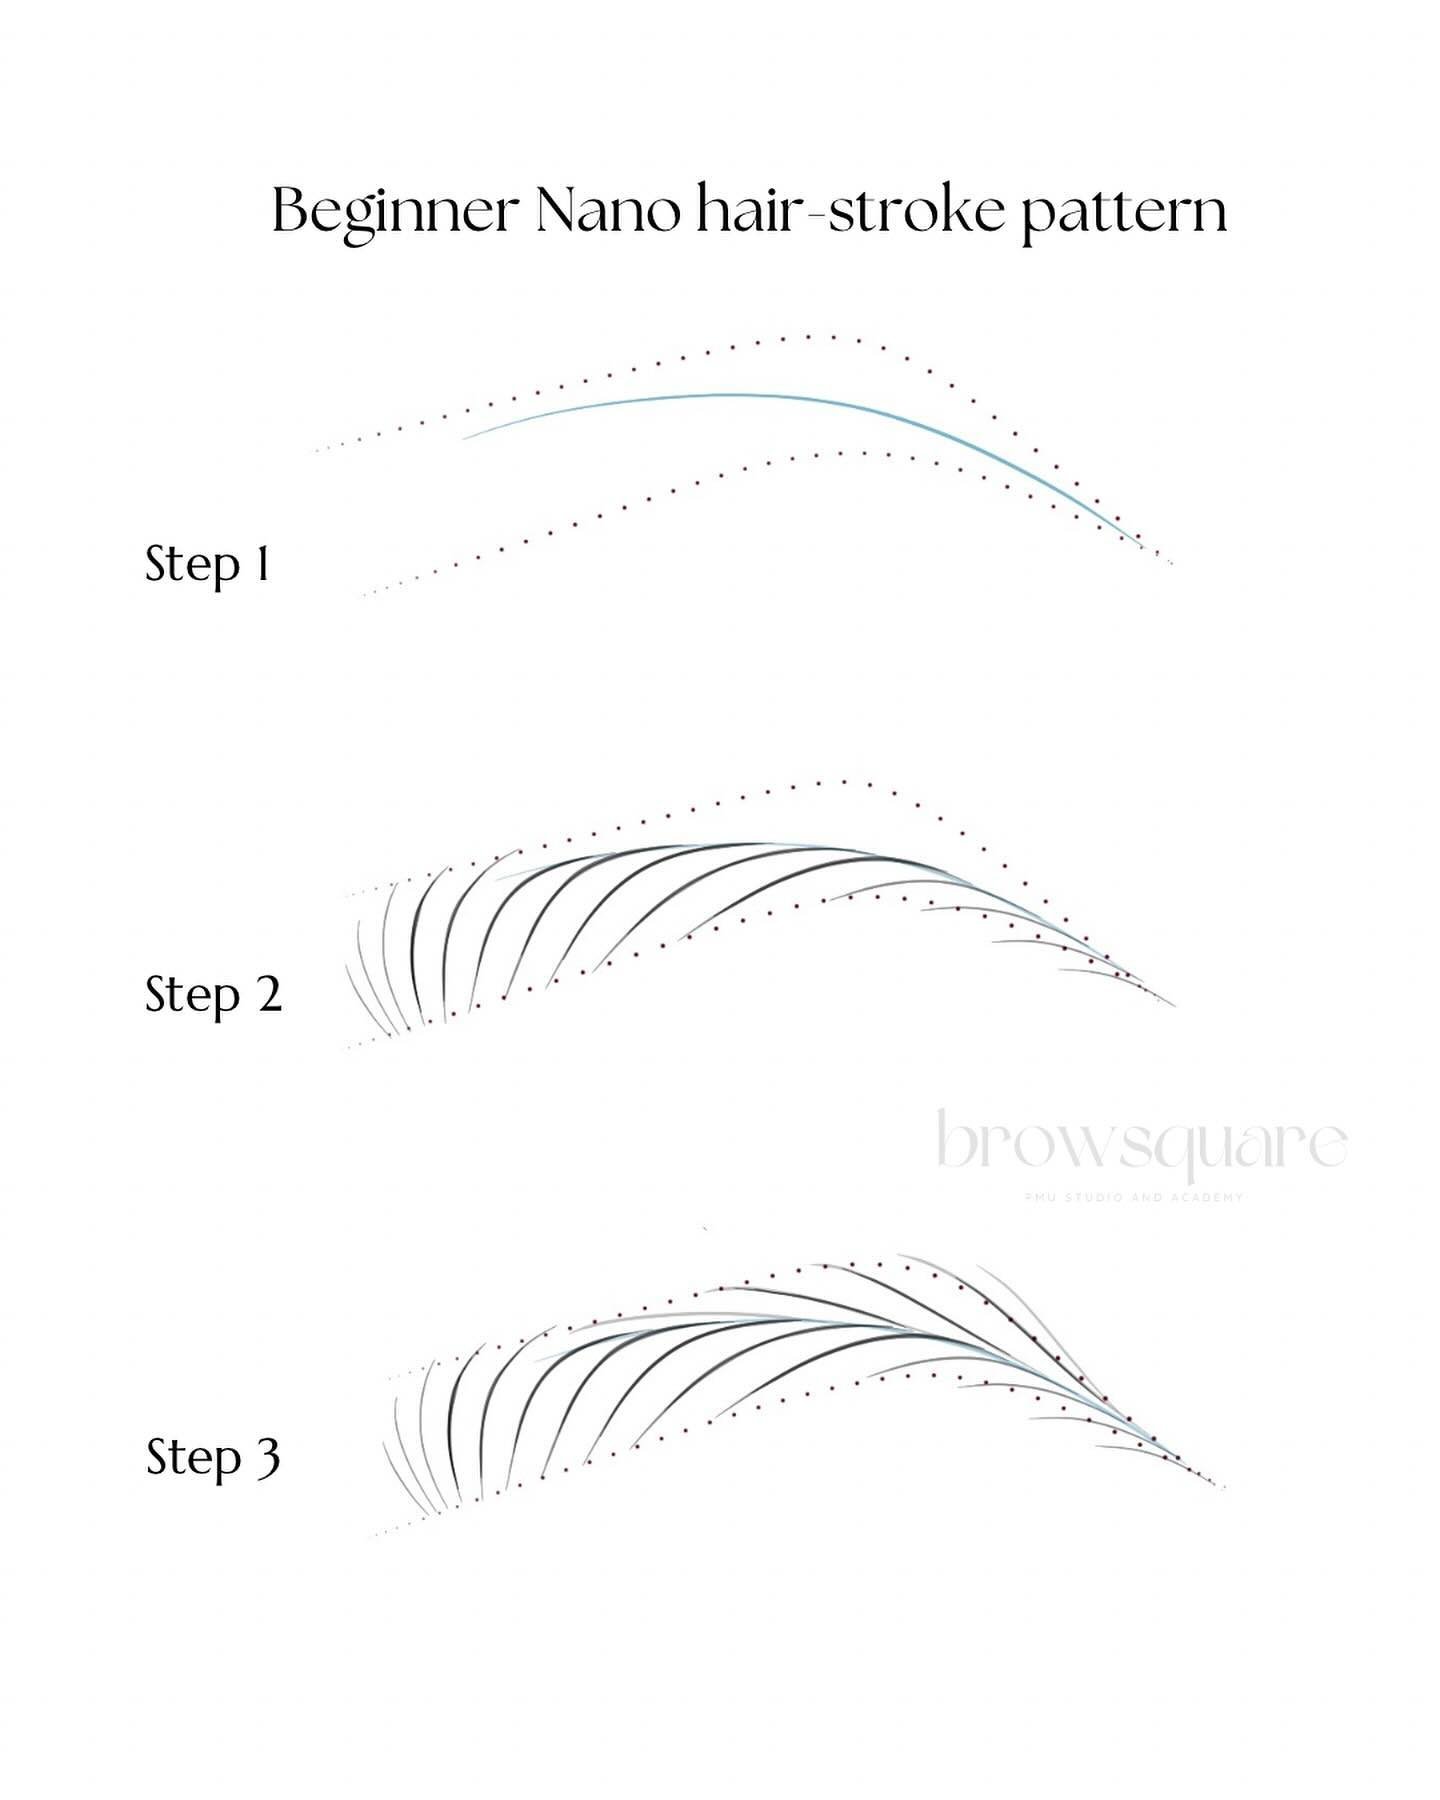 Beginner Nano hair strokes pattern 🧷

#nanohairstrokes #brows #pmu #browpattern